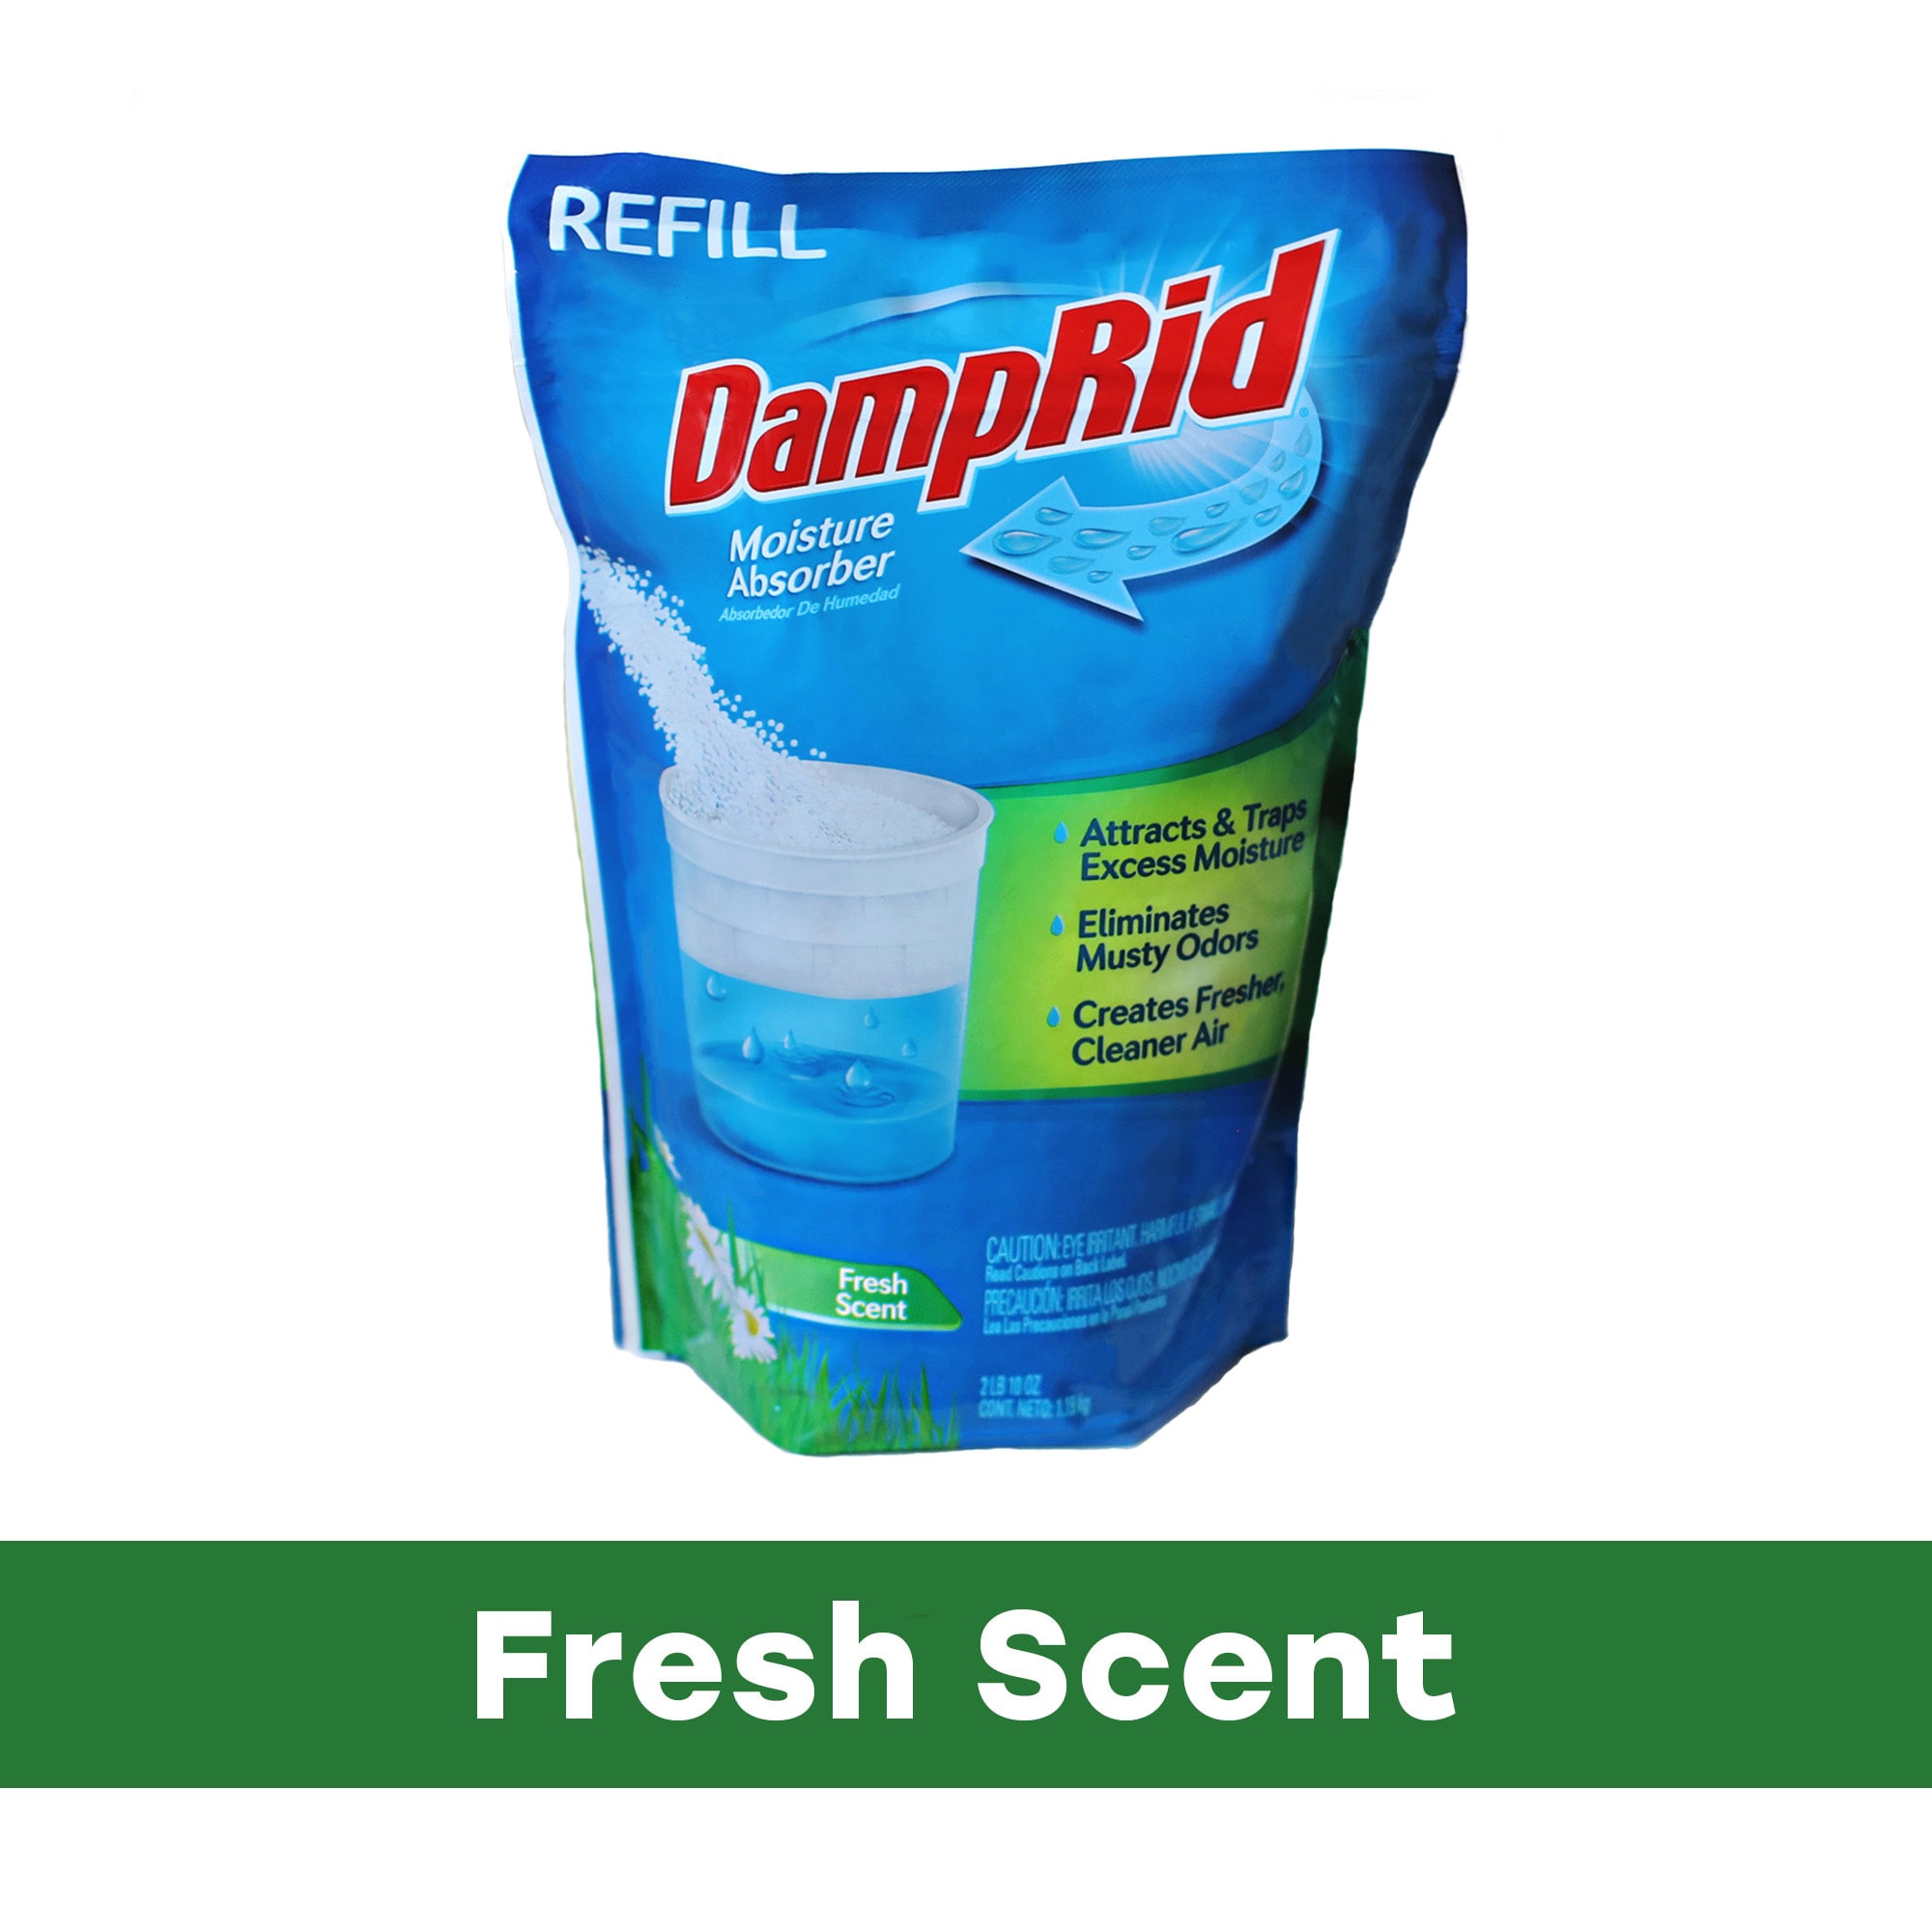 Damprid Moisture Absorber, Fragrance Free, Refill - 42 oz